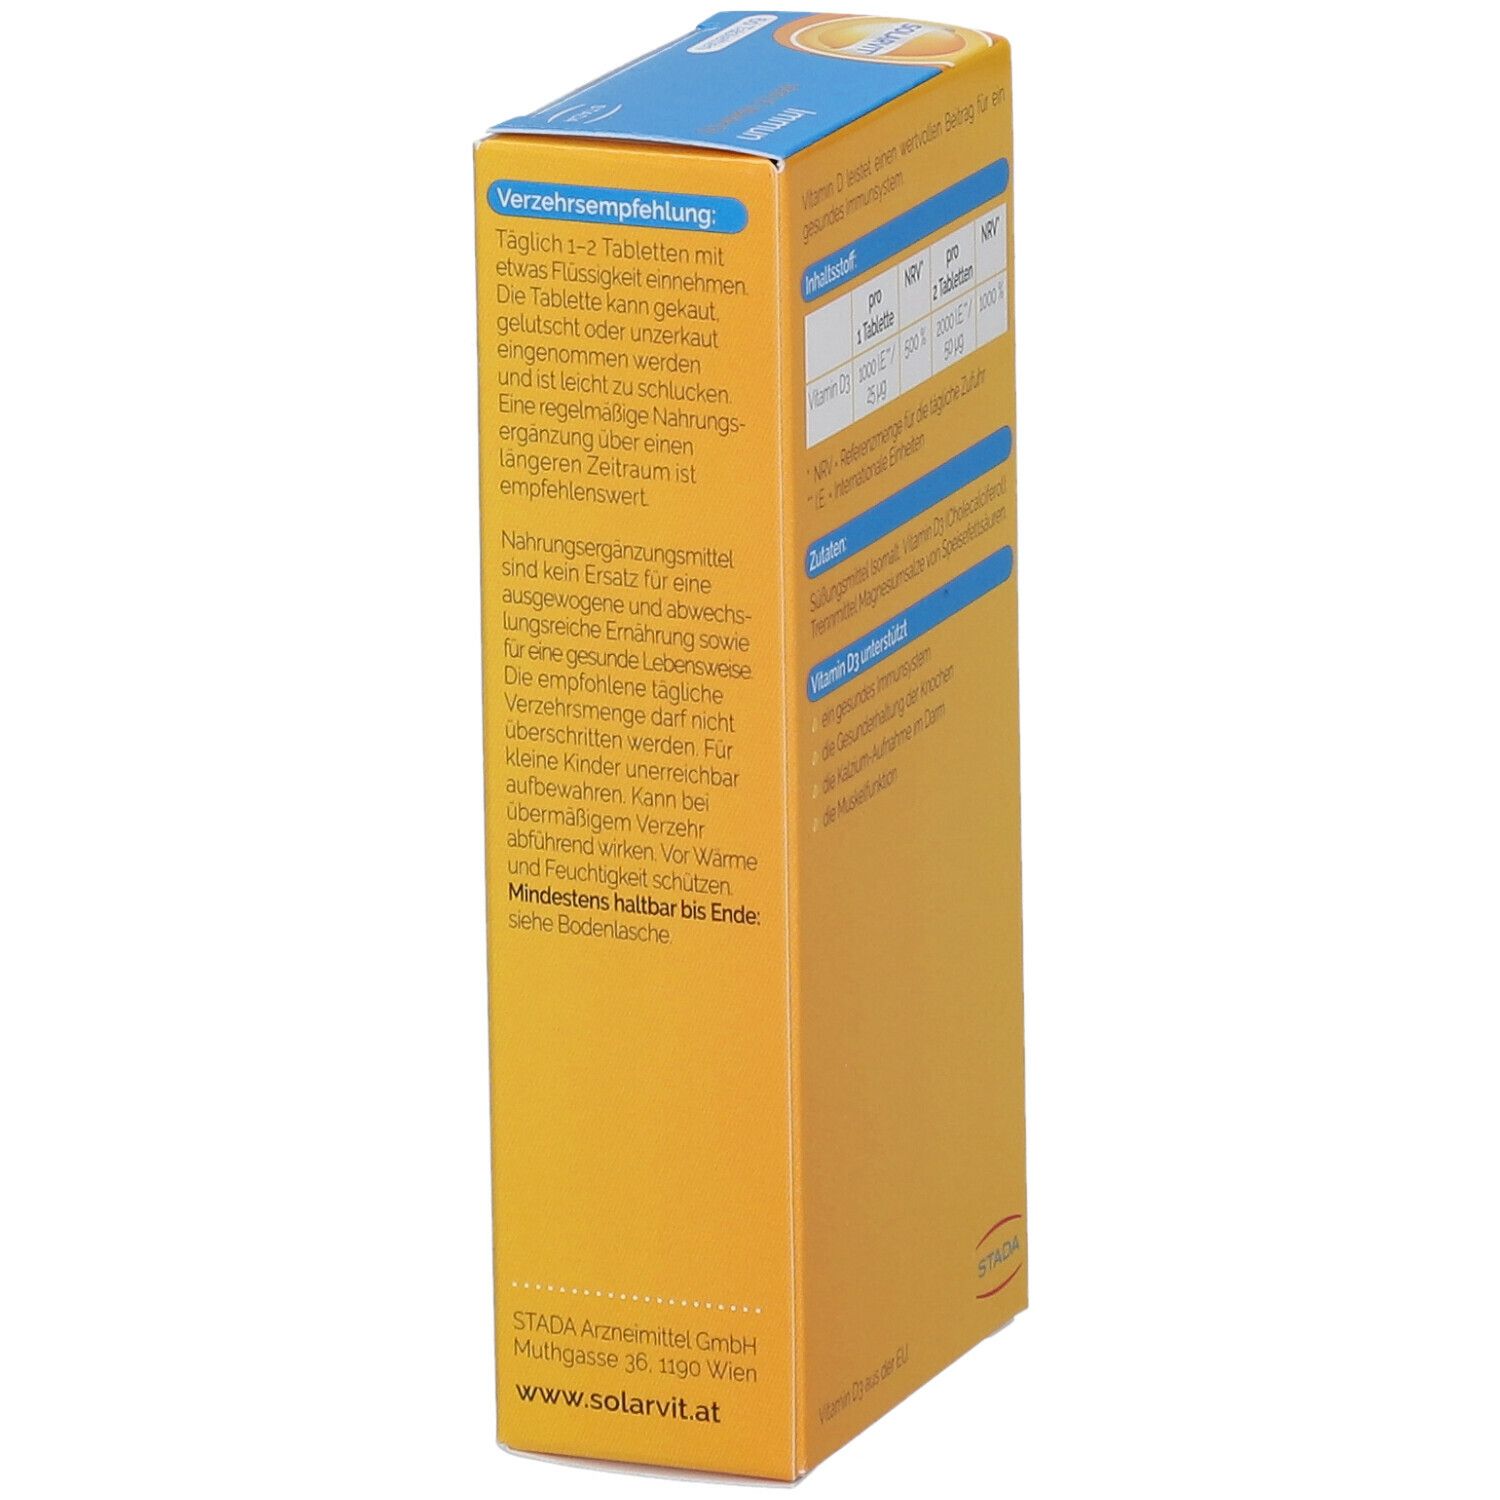 Solarvit® Immun Tabletten D3